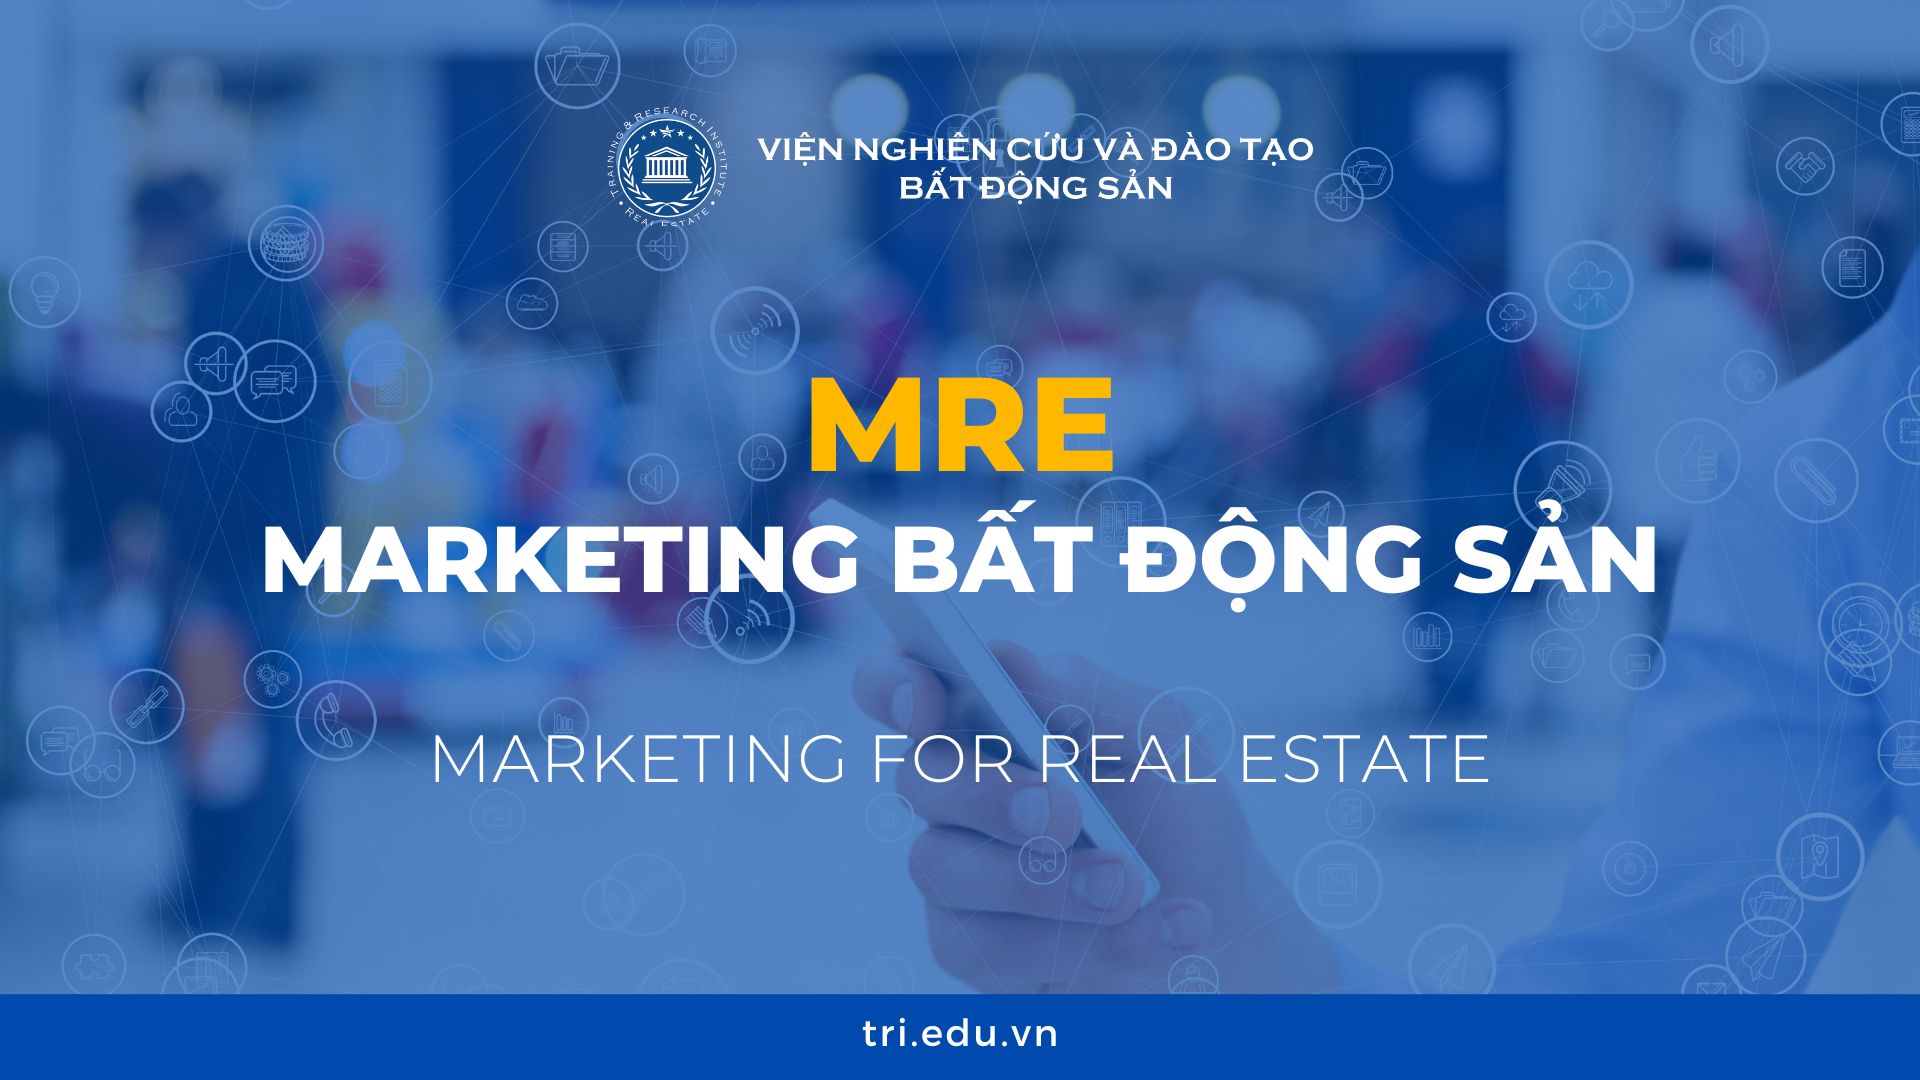 Mre Khoa Hoc Marketing Bat Dong San